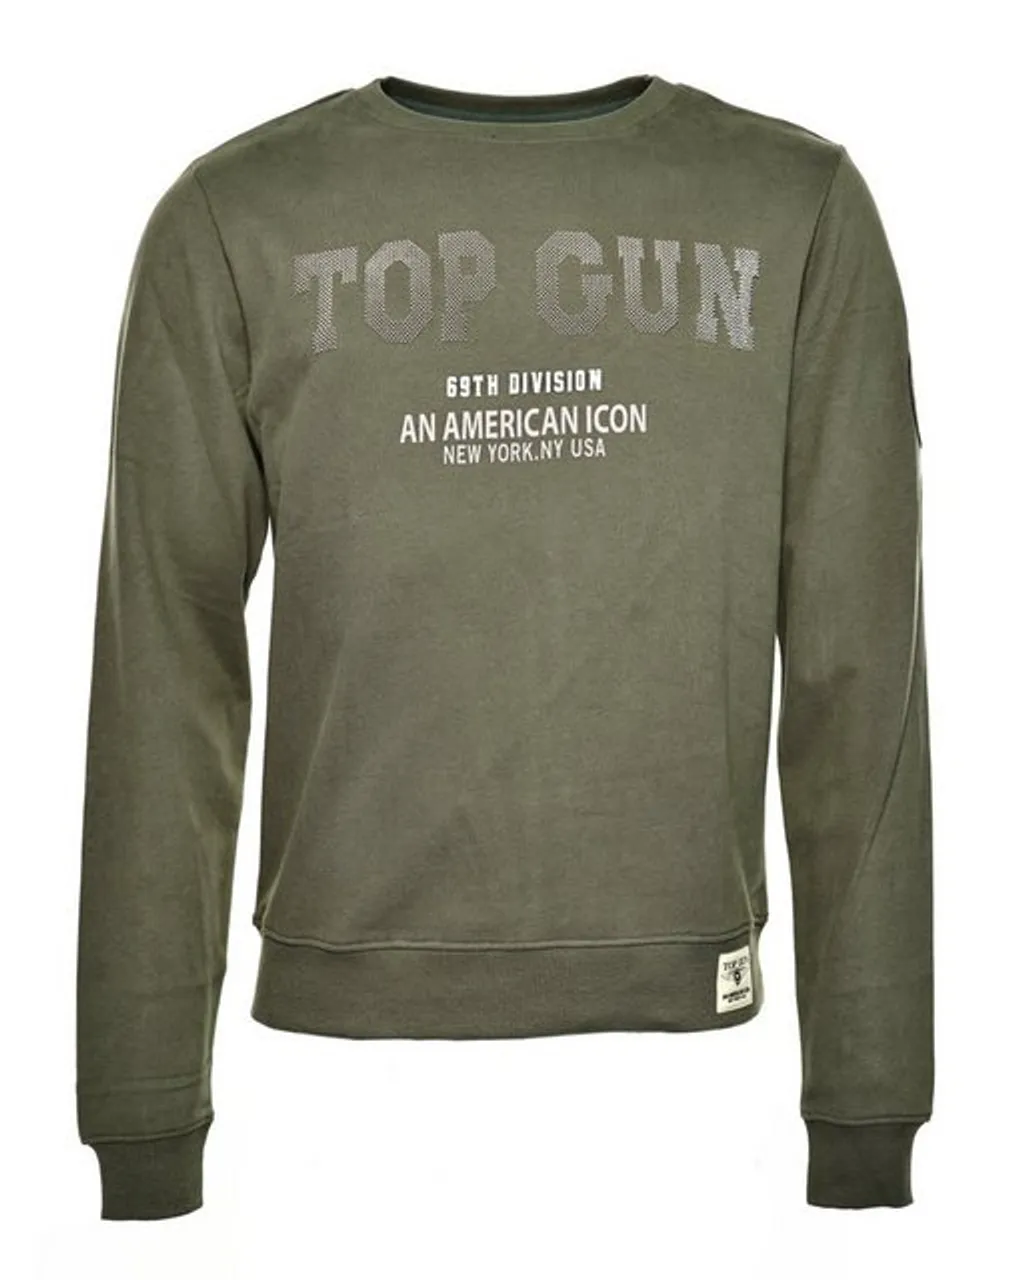 TOP GUN Sweater TG20213007